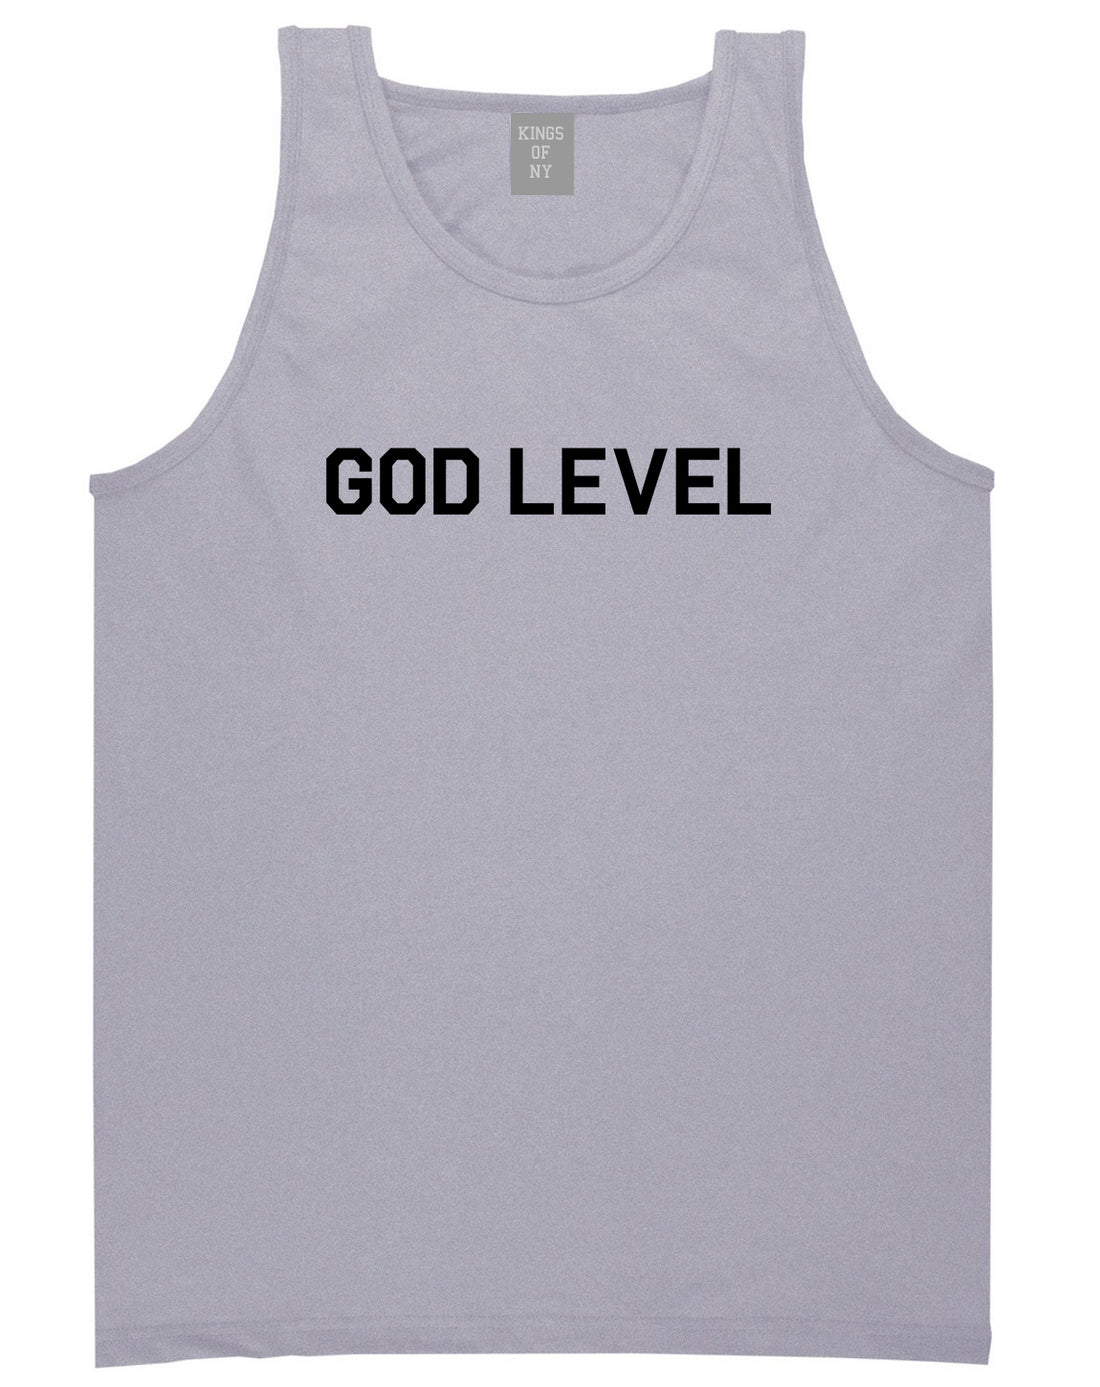 God Level Mens Tank Top Shirt Grey by Kings Of NY